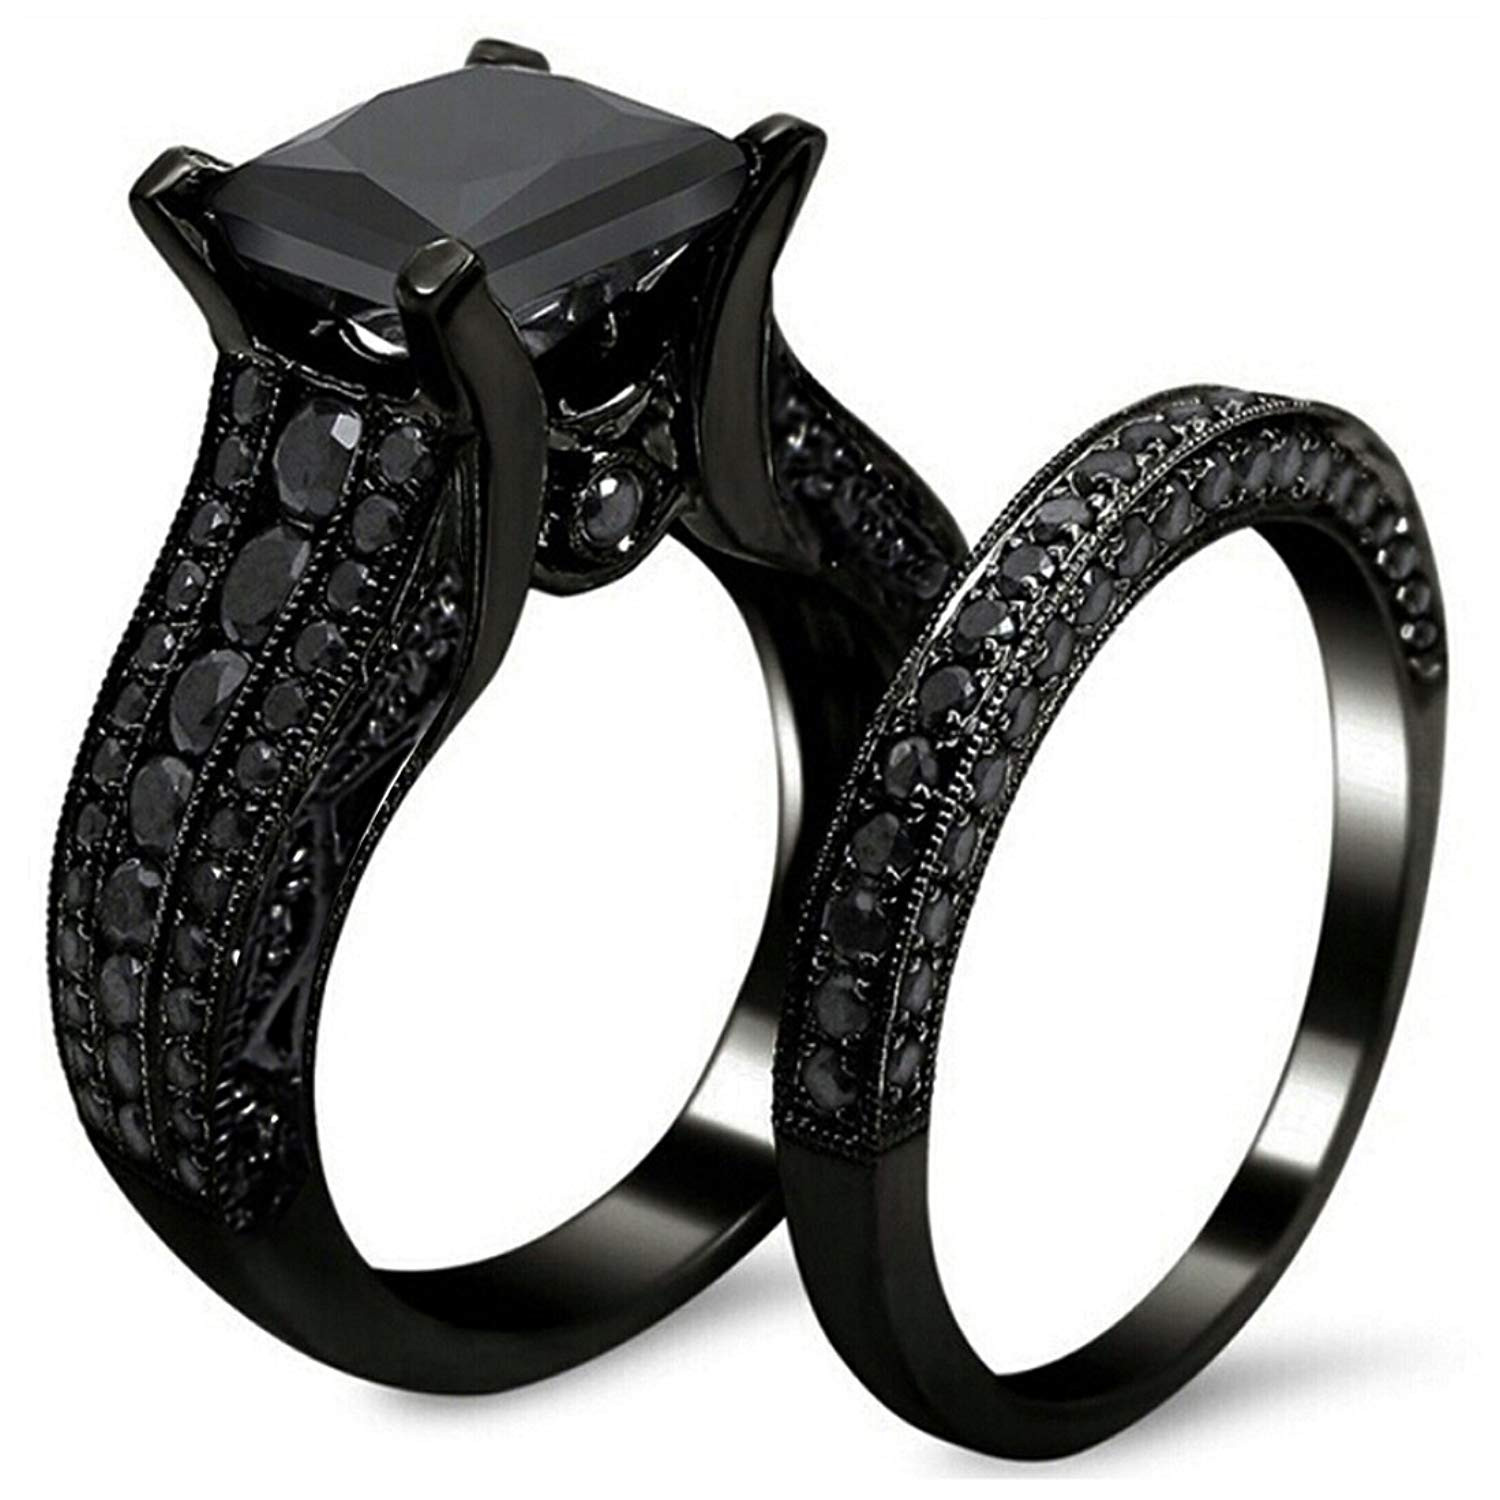 Black Gold Wedding Rings
 women s gothic retro black gold wedding engagement band